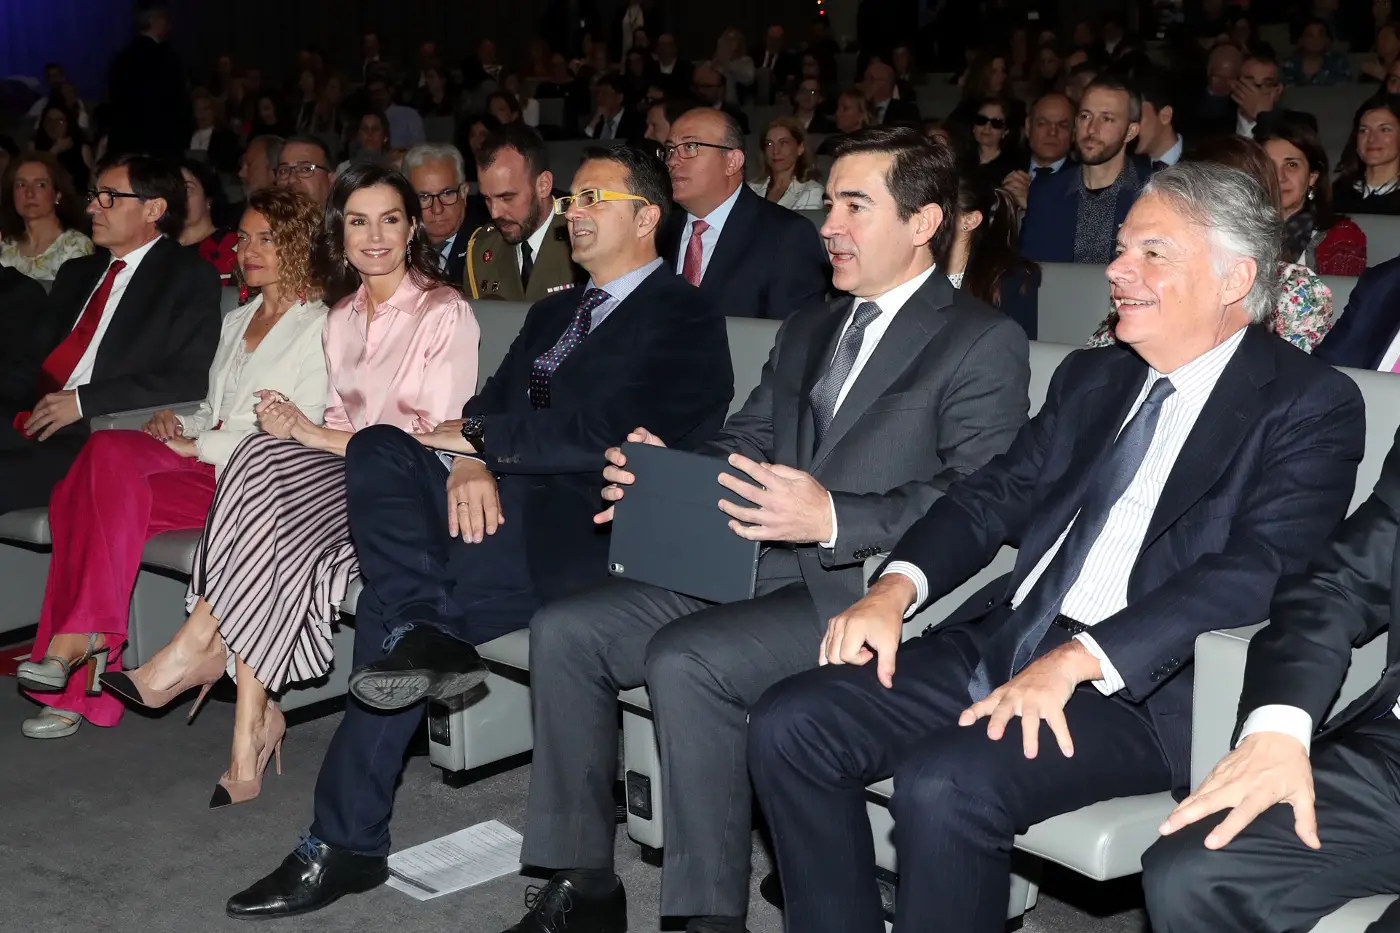 Queen Letizia attended Rare Disease day event 